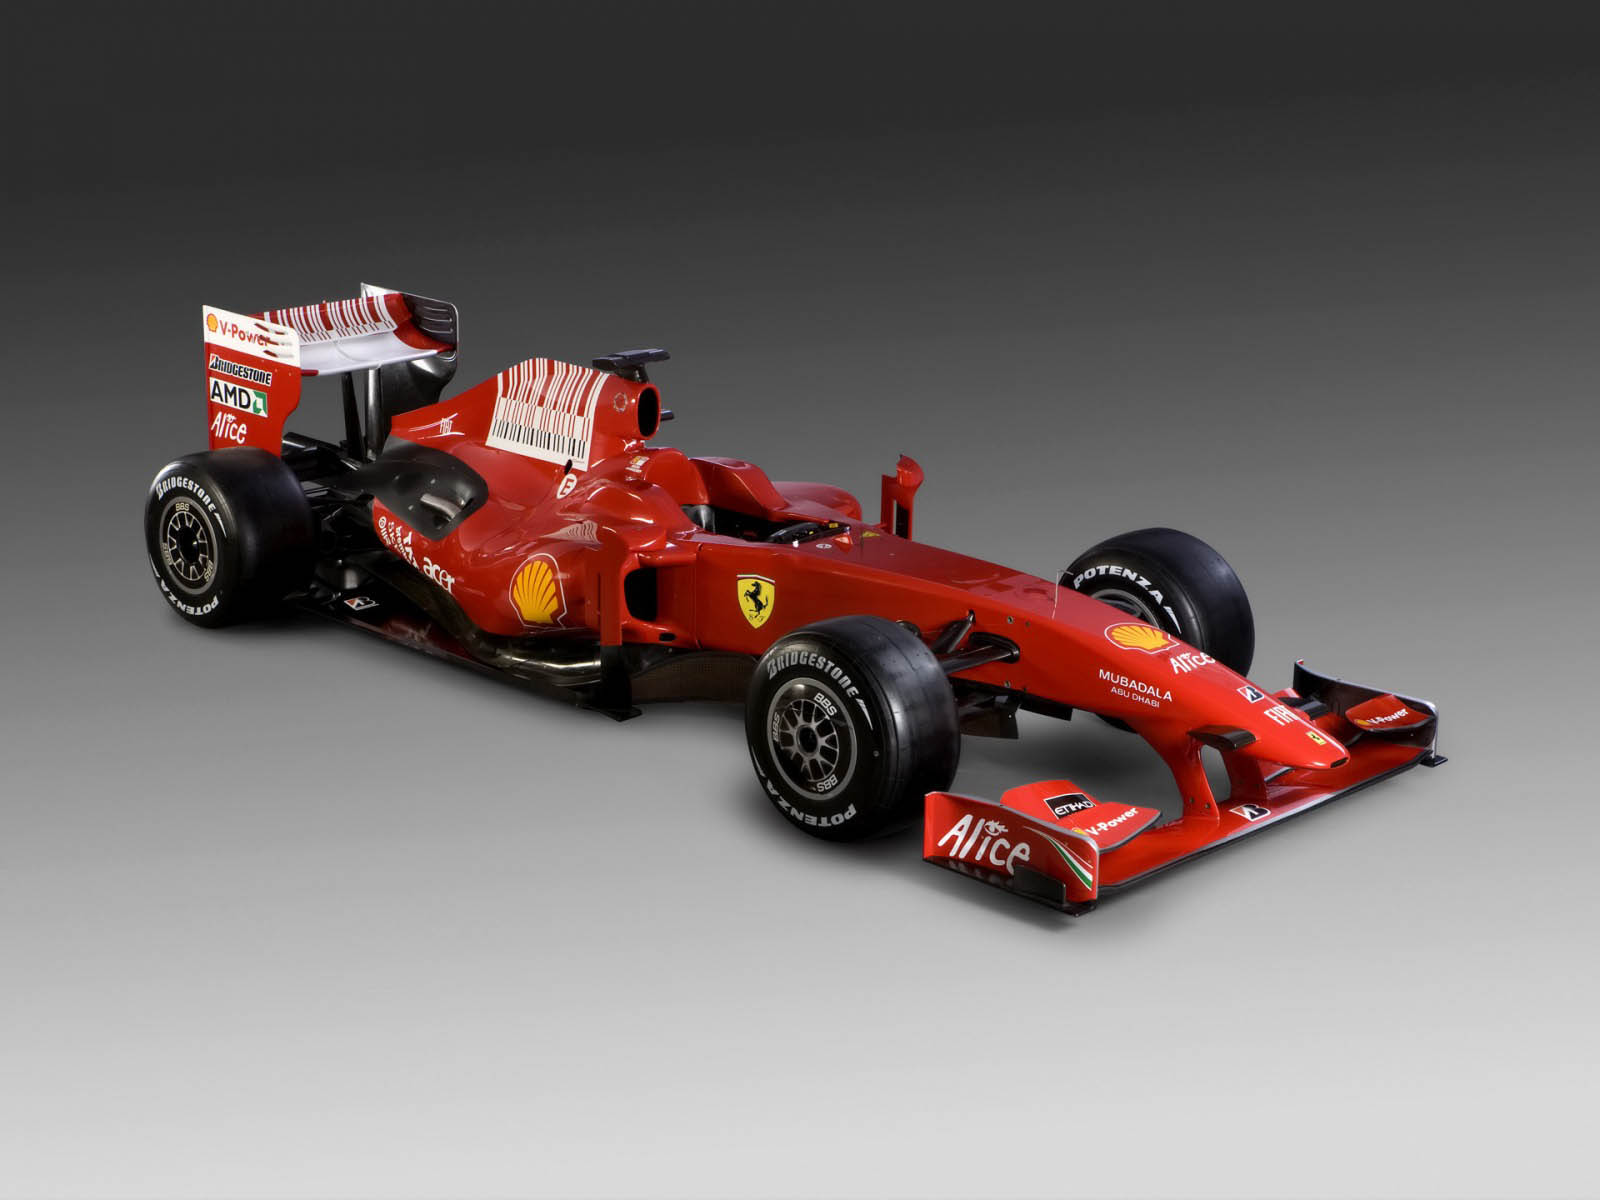 Wallpaper Mobil Balap Formula 1